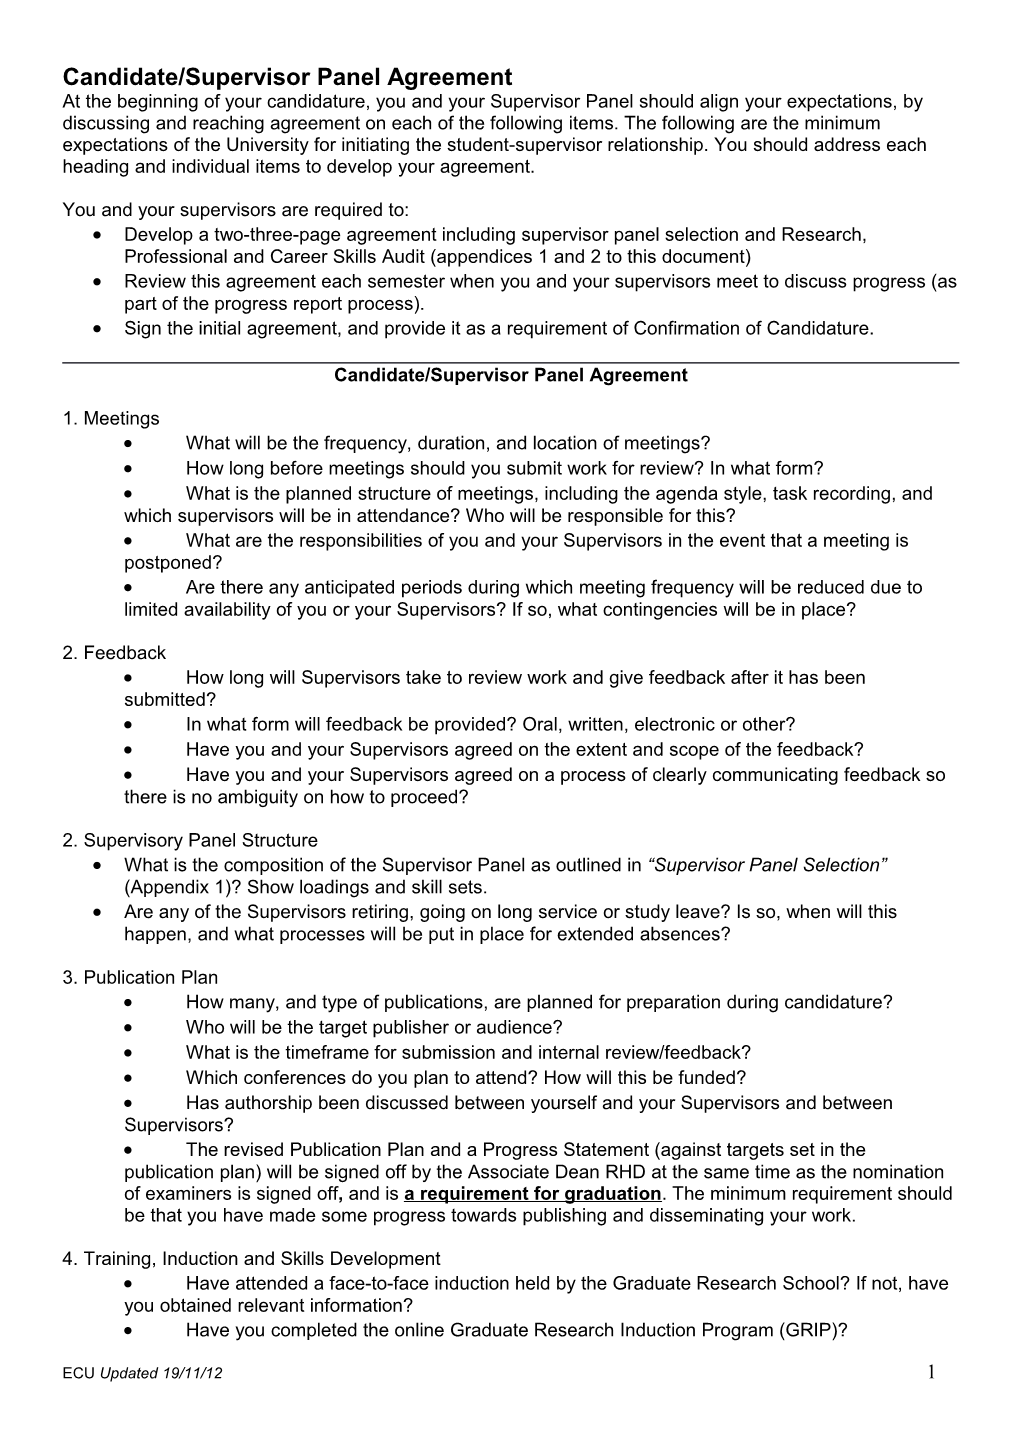 Candidate/Supervisor Panel Agreement